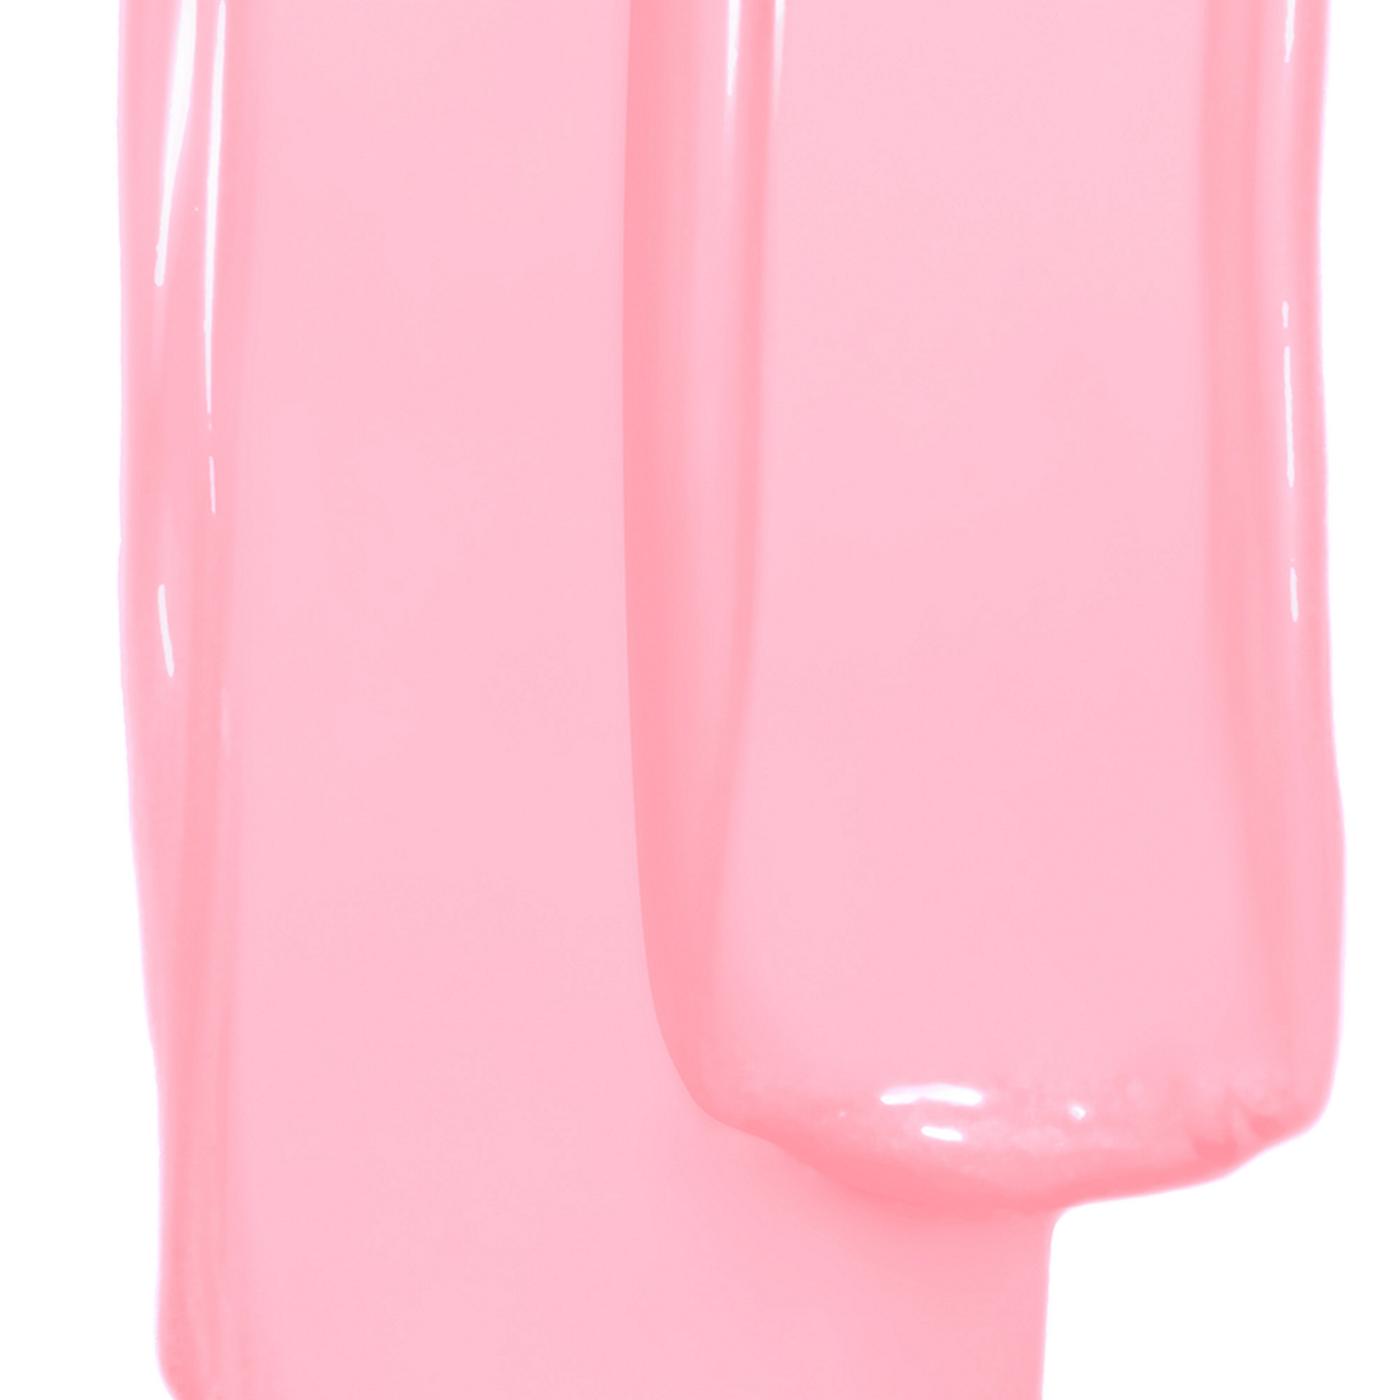 Revlon Super Lustrous The Gloss, 207 Pink Sky; image 9 of 9